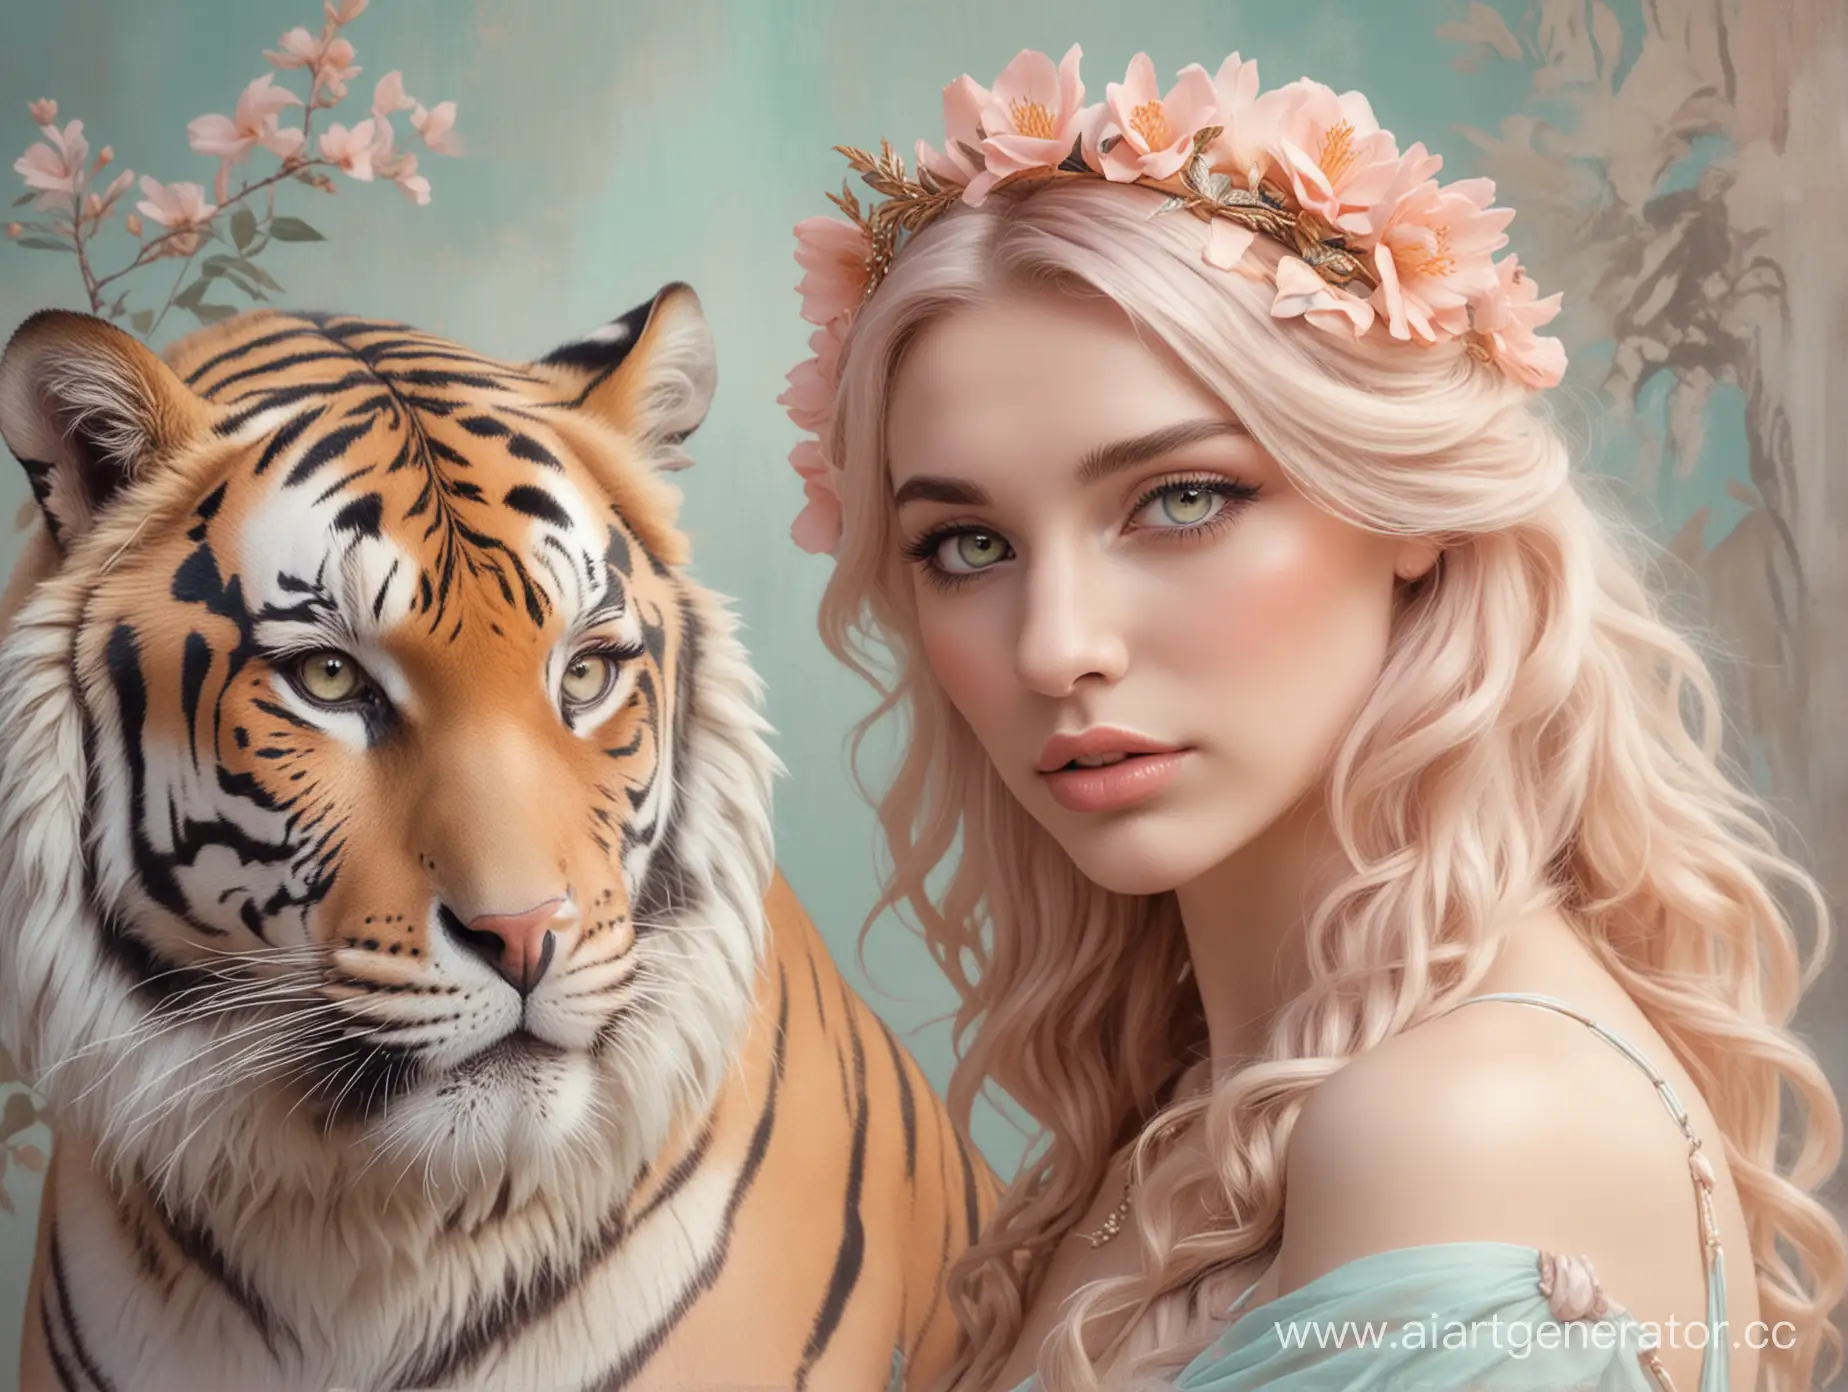 Graceful-Goddess-Aphrodite-and-Majestic-Tiger-in-Pastel-Elegance